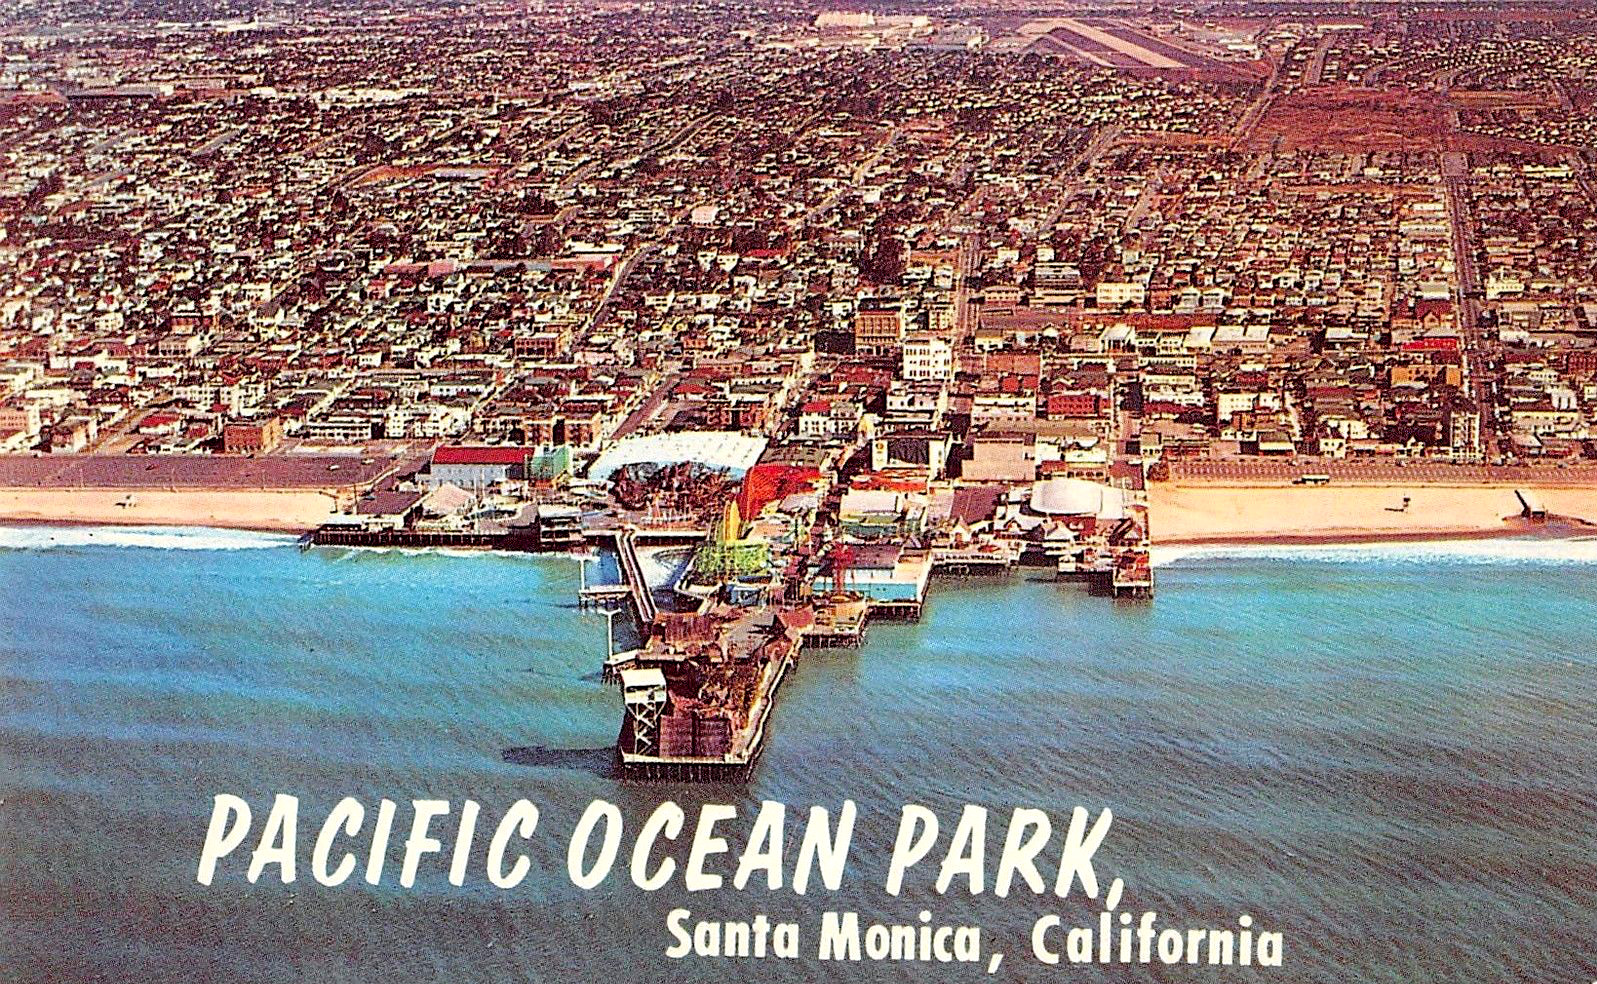 Aerial view of Pacific Ocean Park